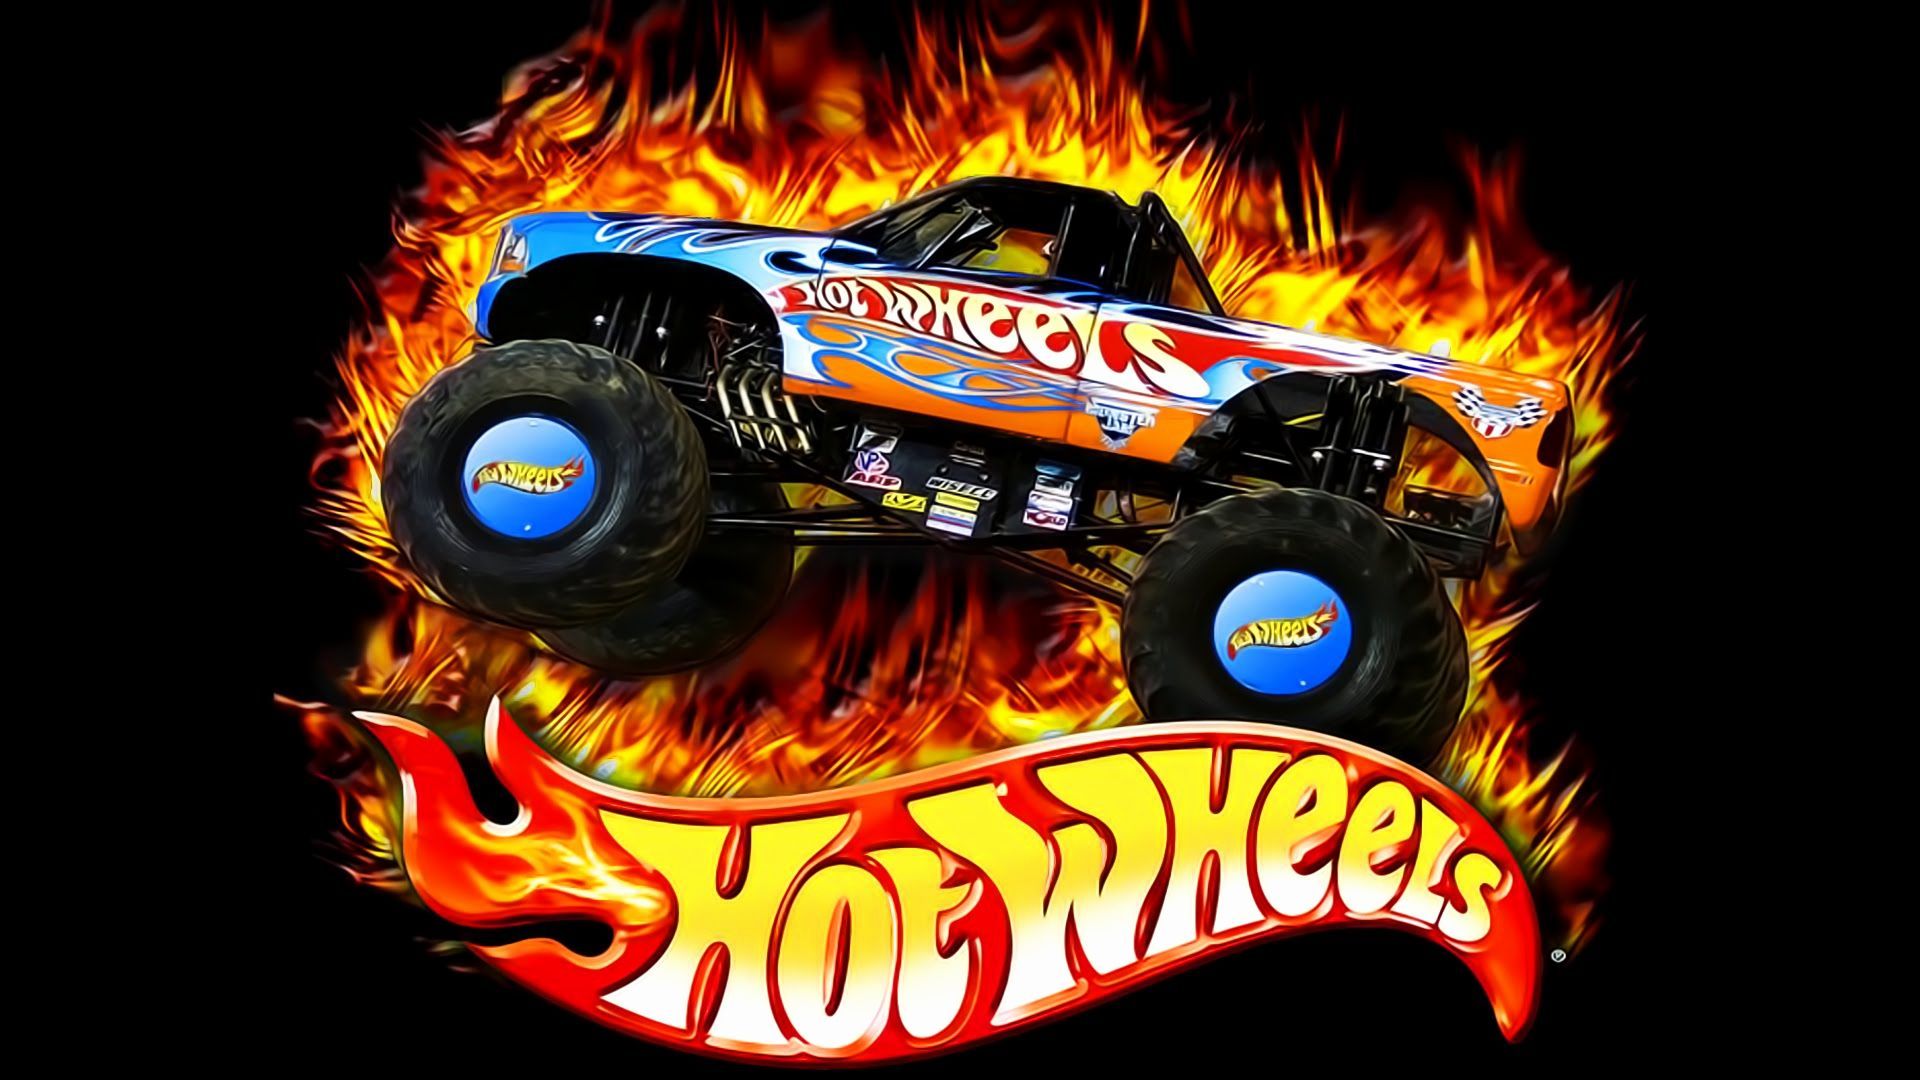 Hot Wheels Cars Wallpaper Free Hot Wheels Cars Background - Hot wheels, Monster trucks, Hot wheels toys